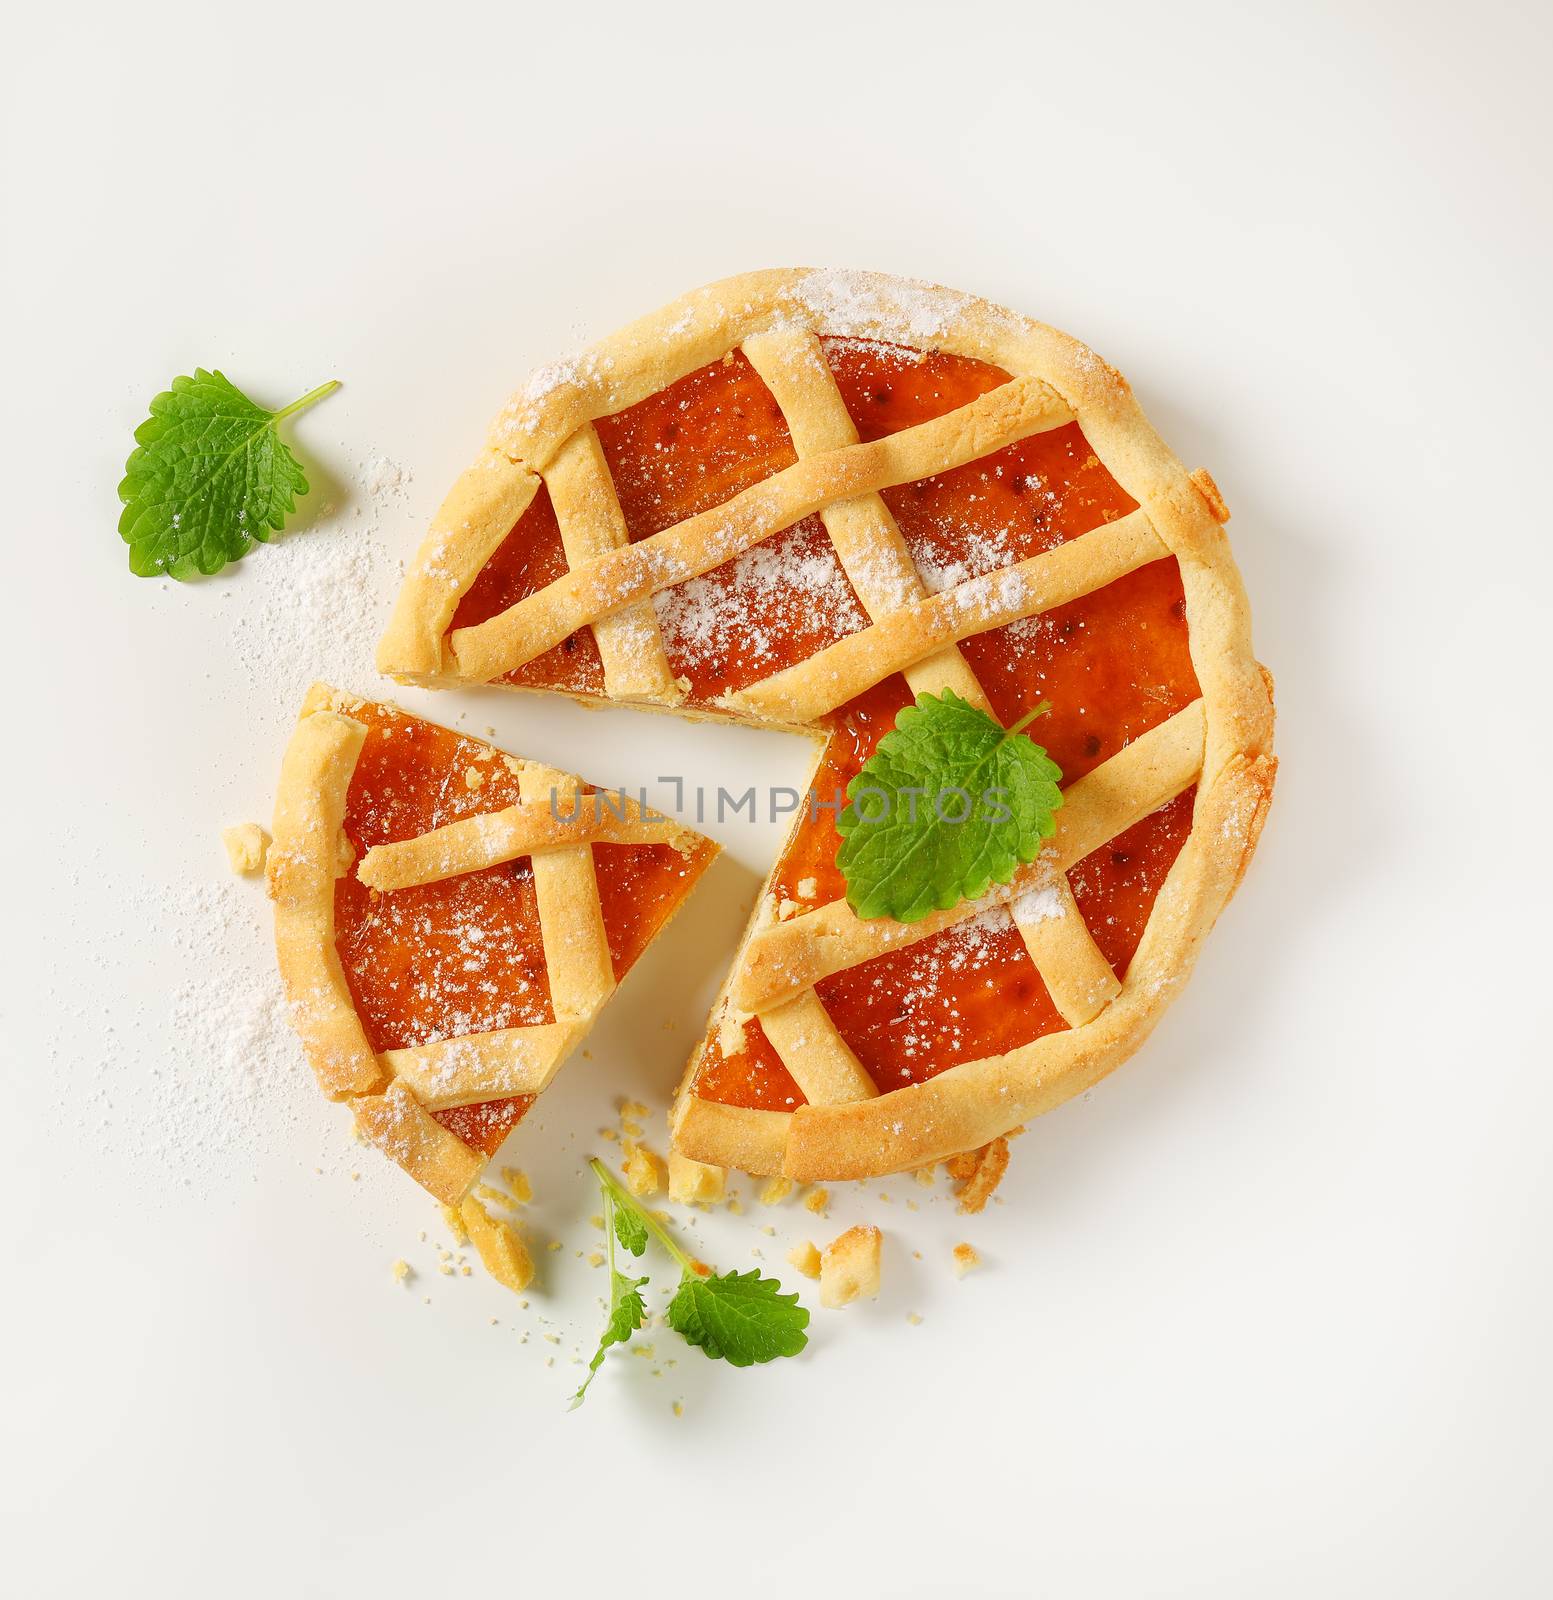 Lattice topped fruit tart (crostata) by Digifoodstock